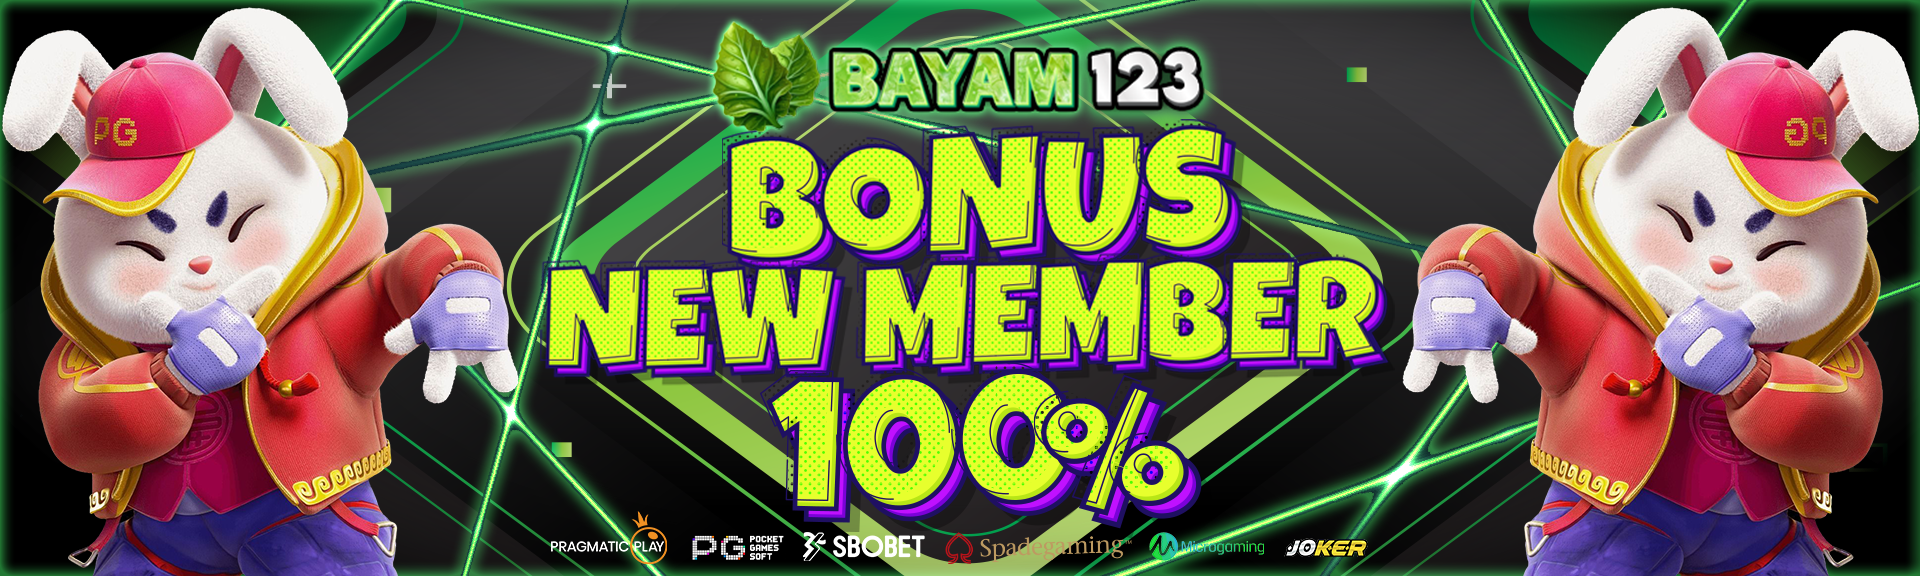 bonus new member bayam123